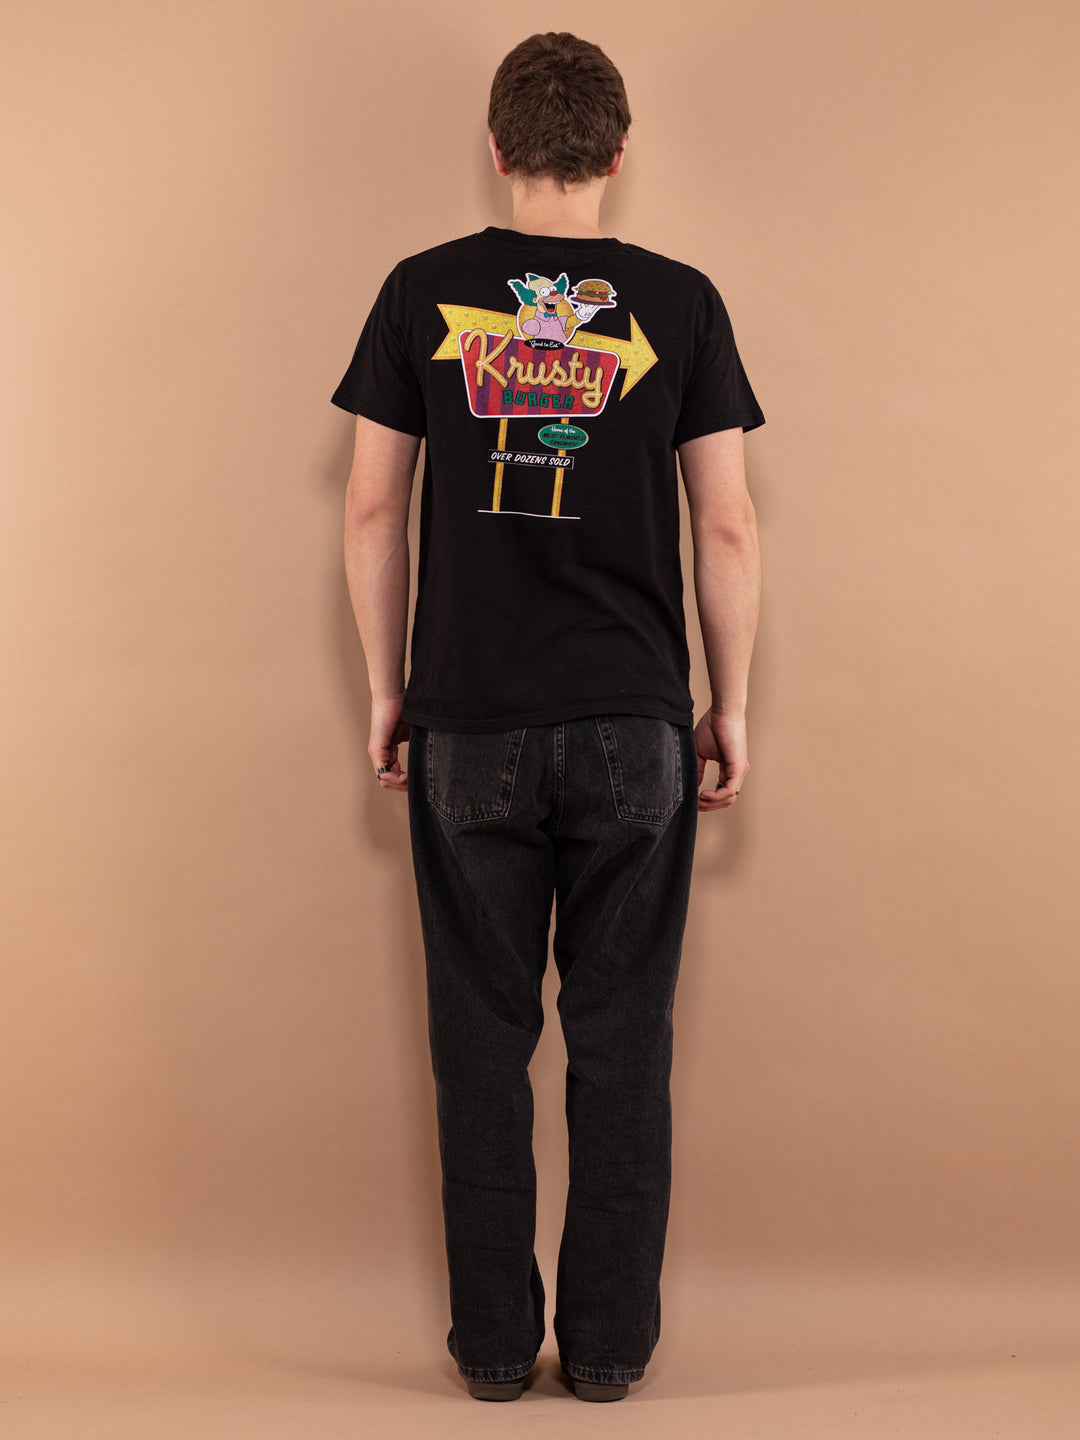 Vintage 00's Men T-shirt with Krusty Burger print